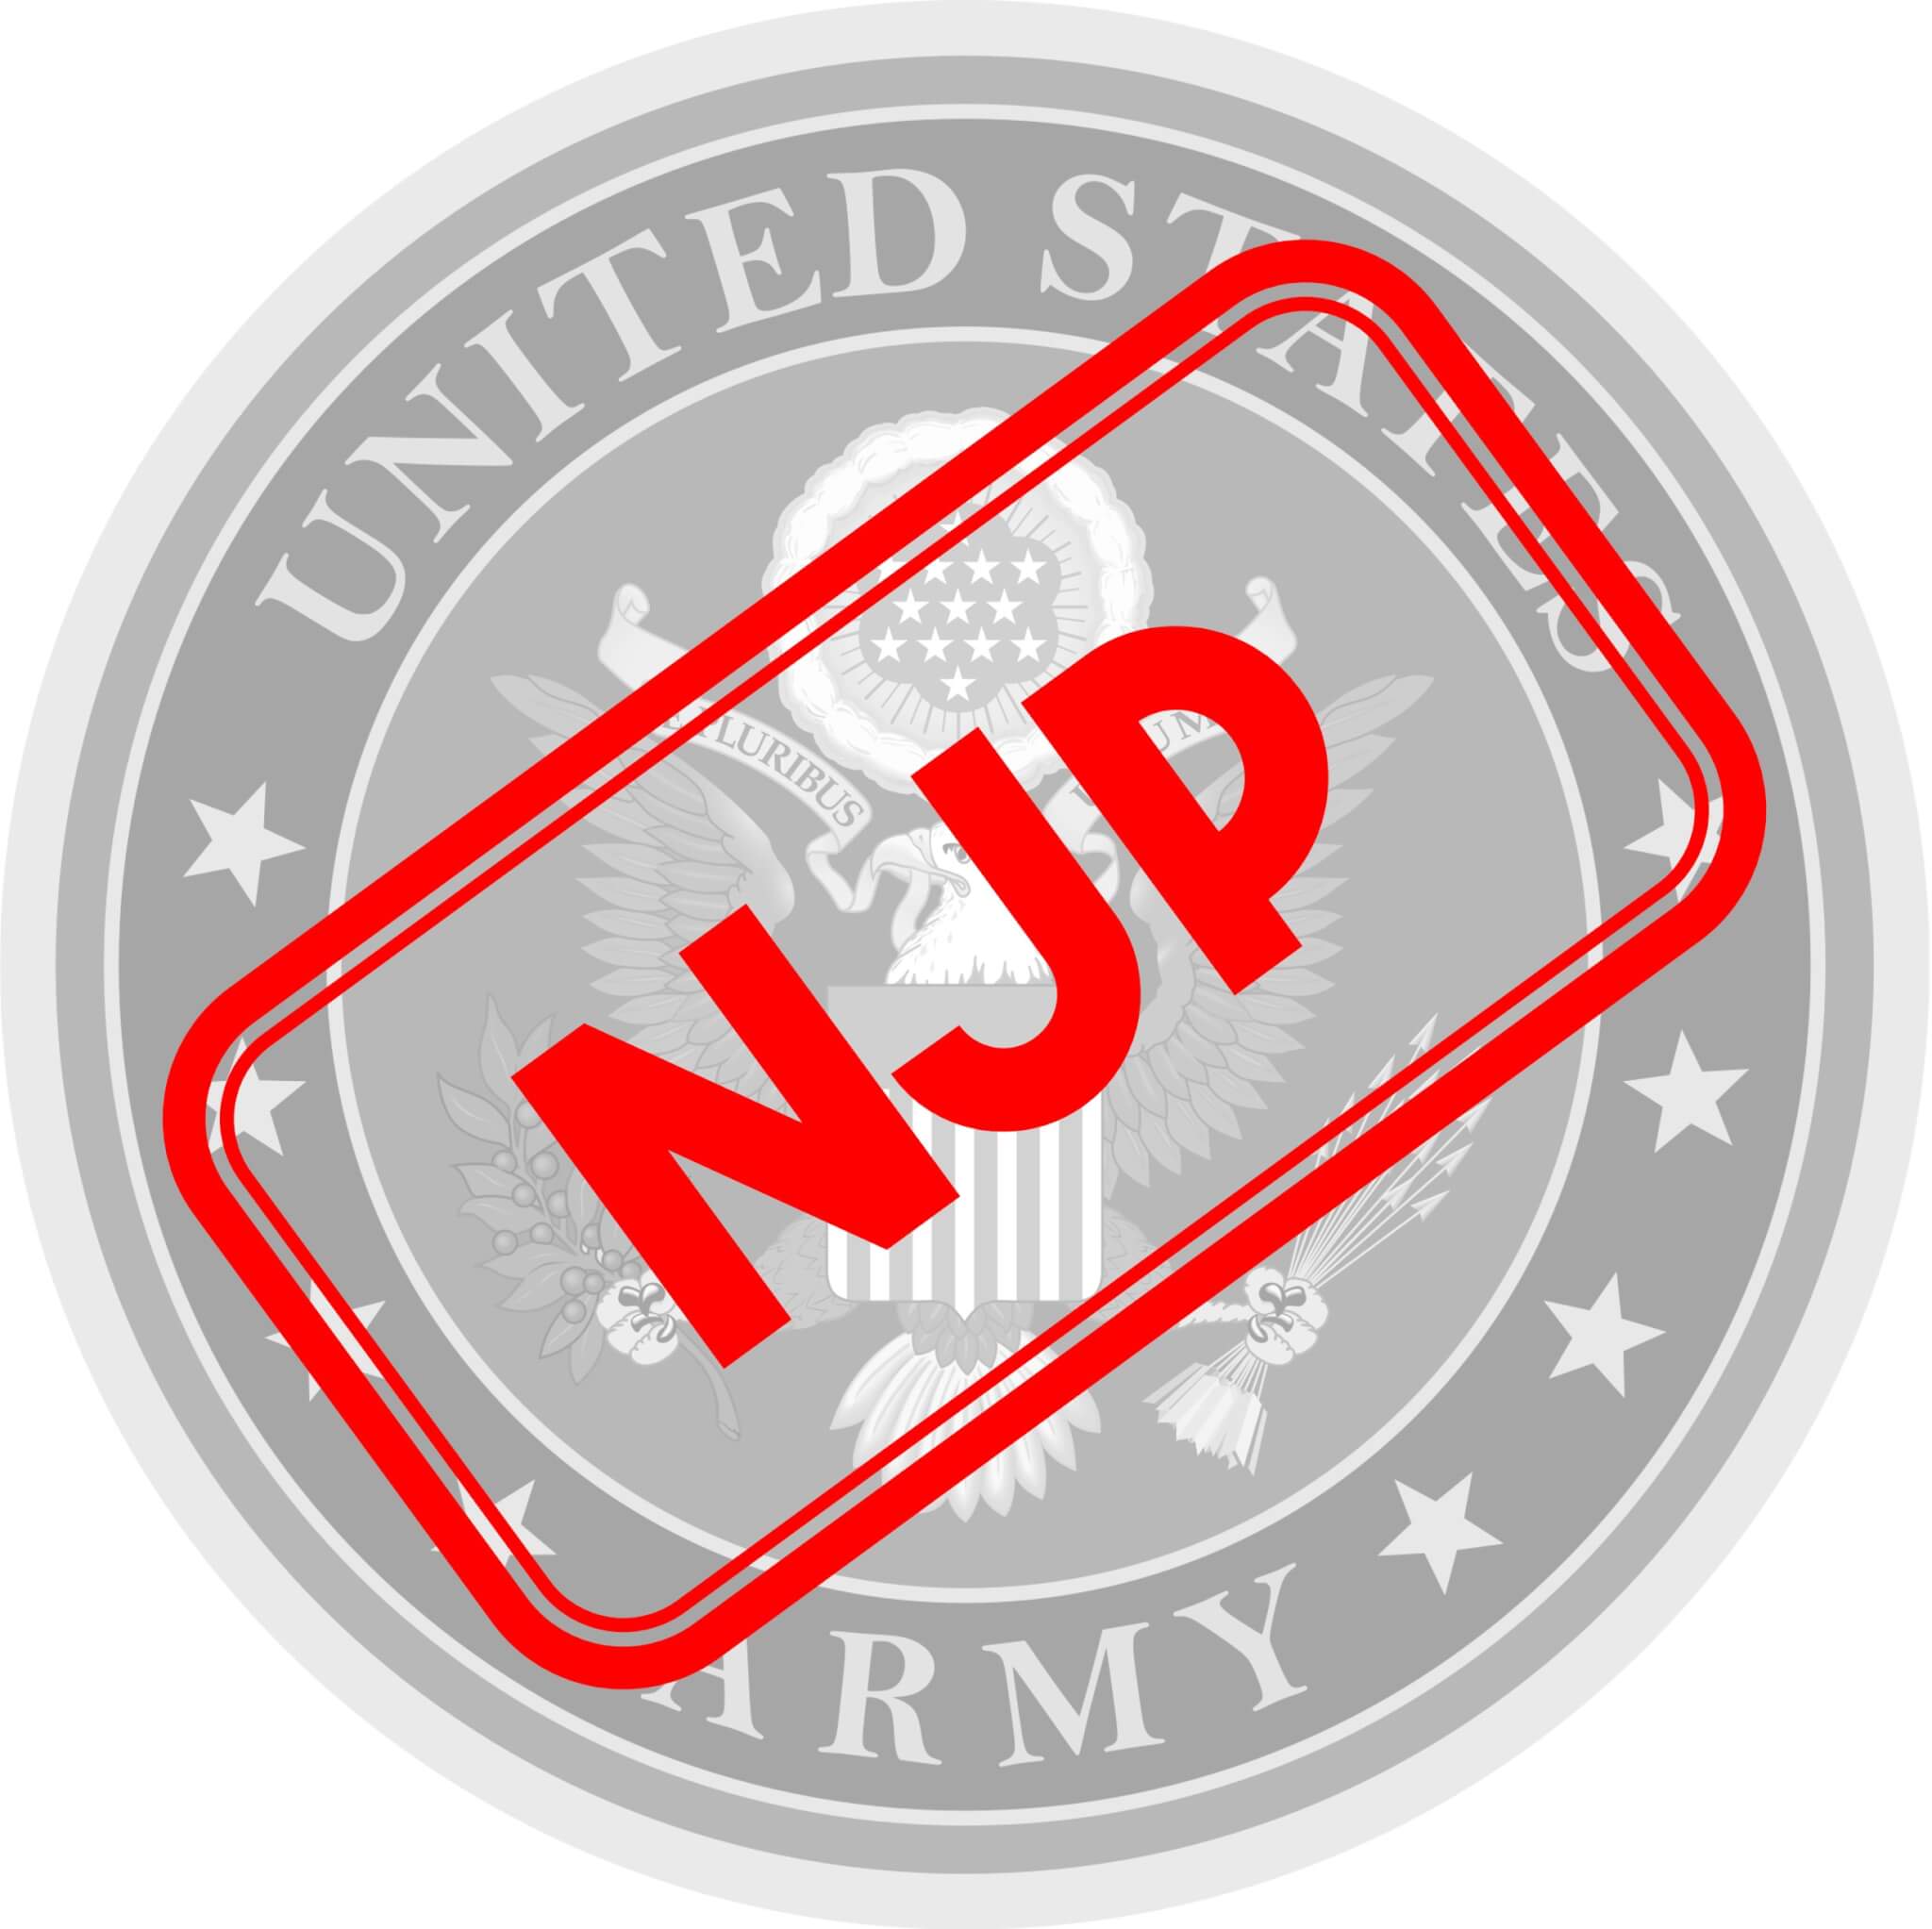 Army NJP Response Template